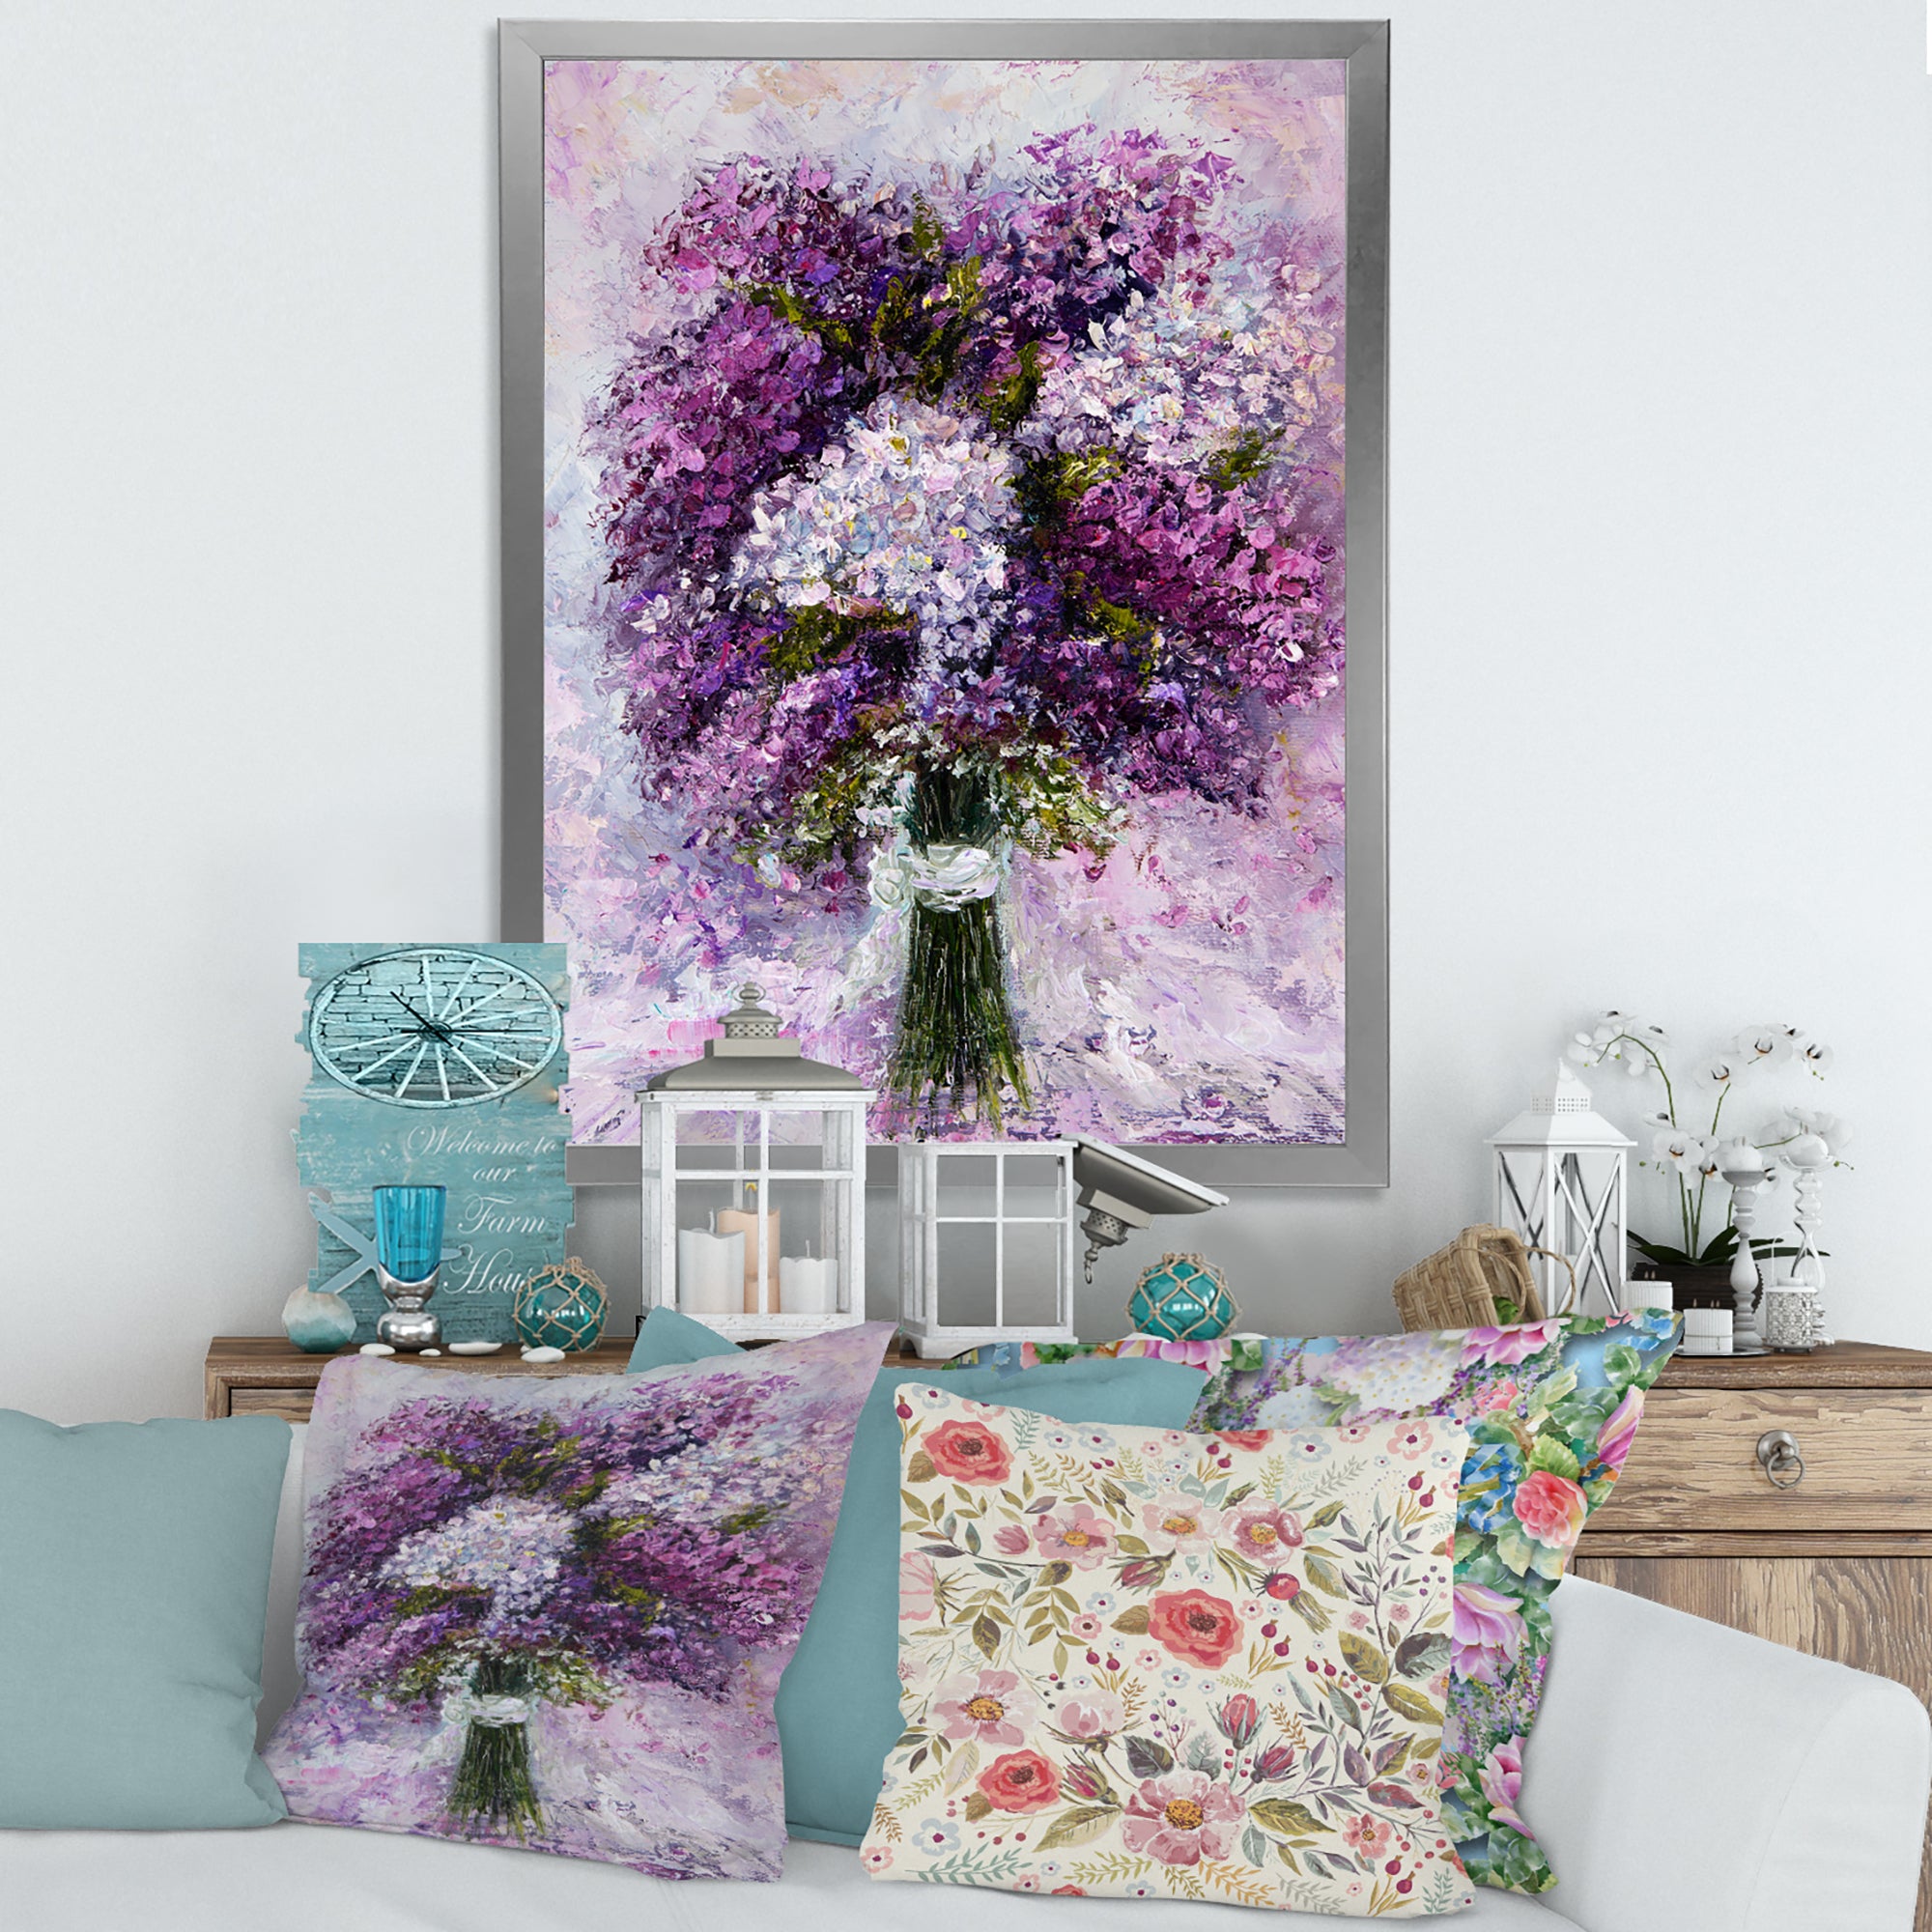 Purple Hyacinth Bouquet